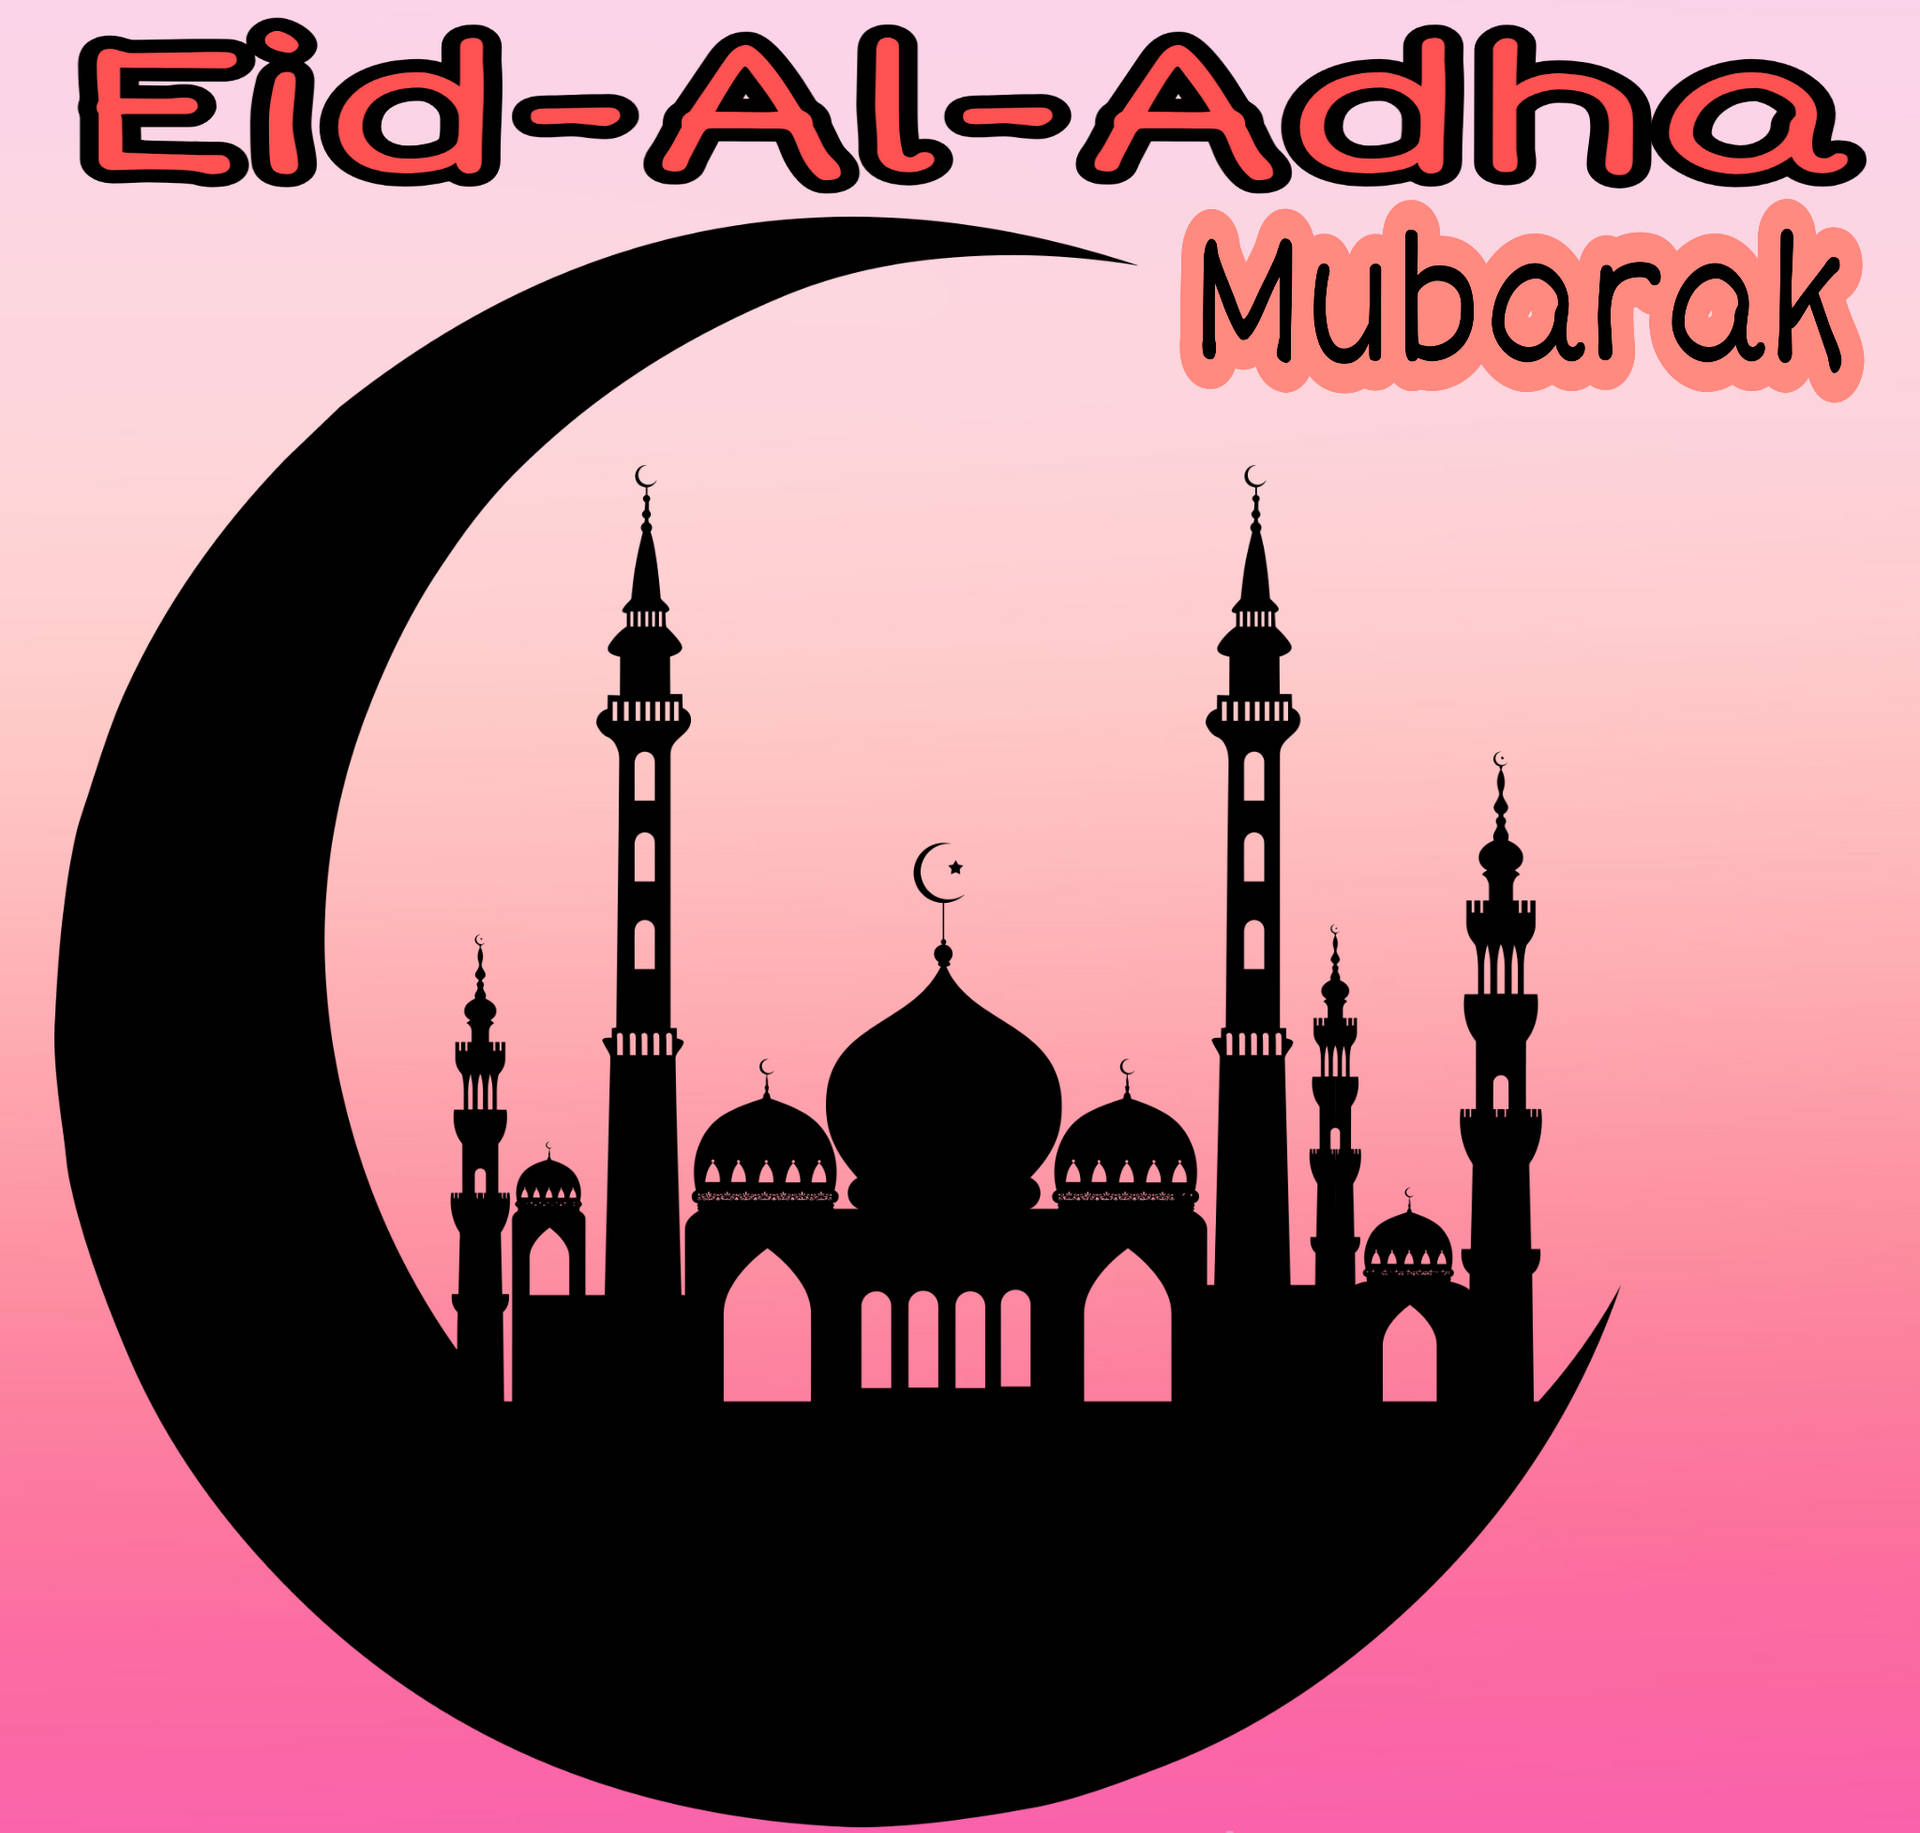 Eidul-adha Mubarak Mosque Moon In Spanish: 